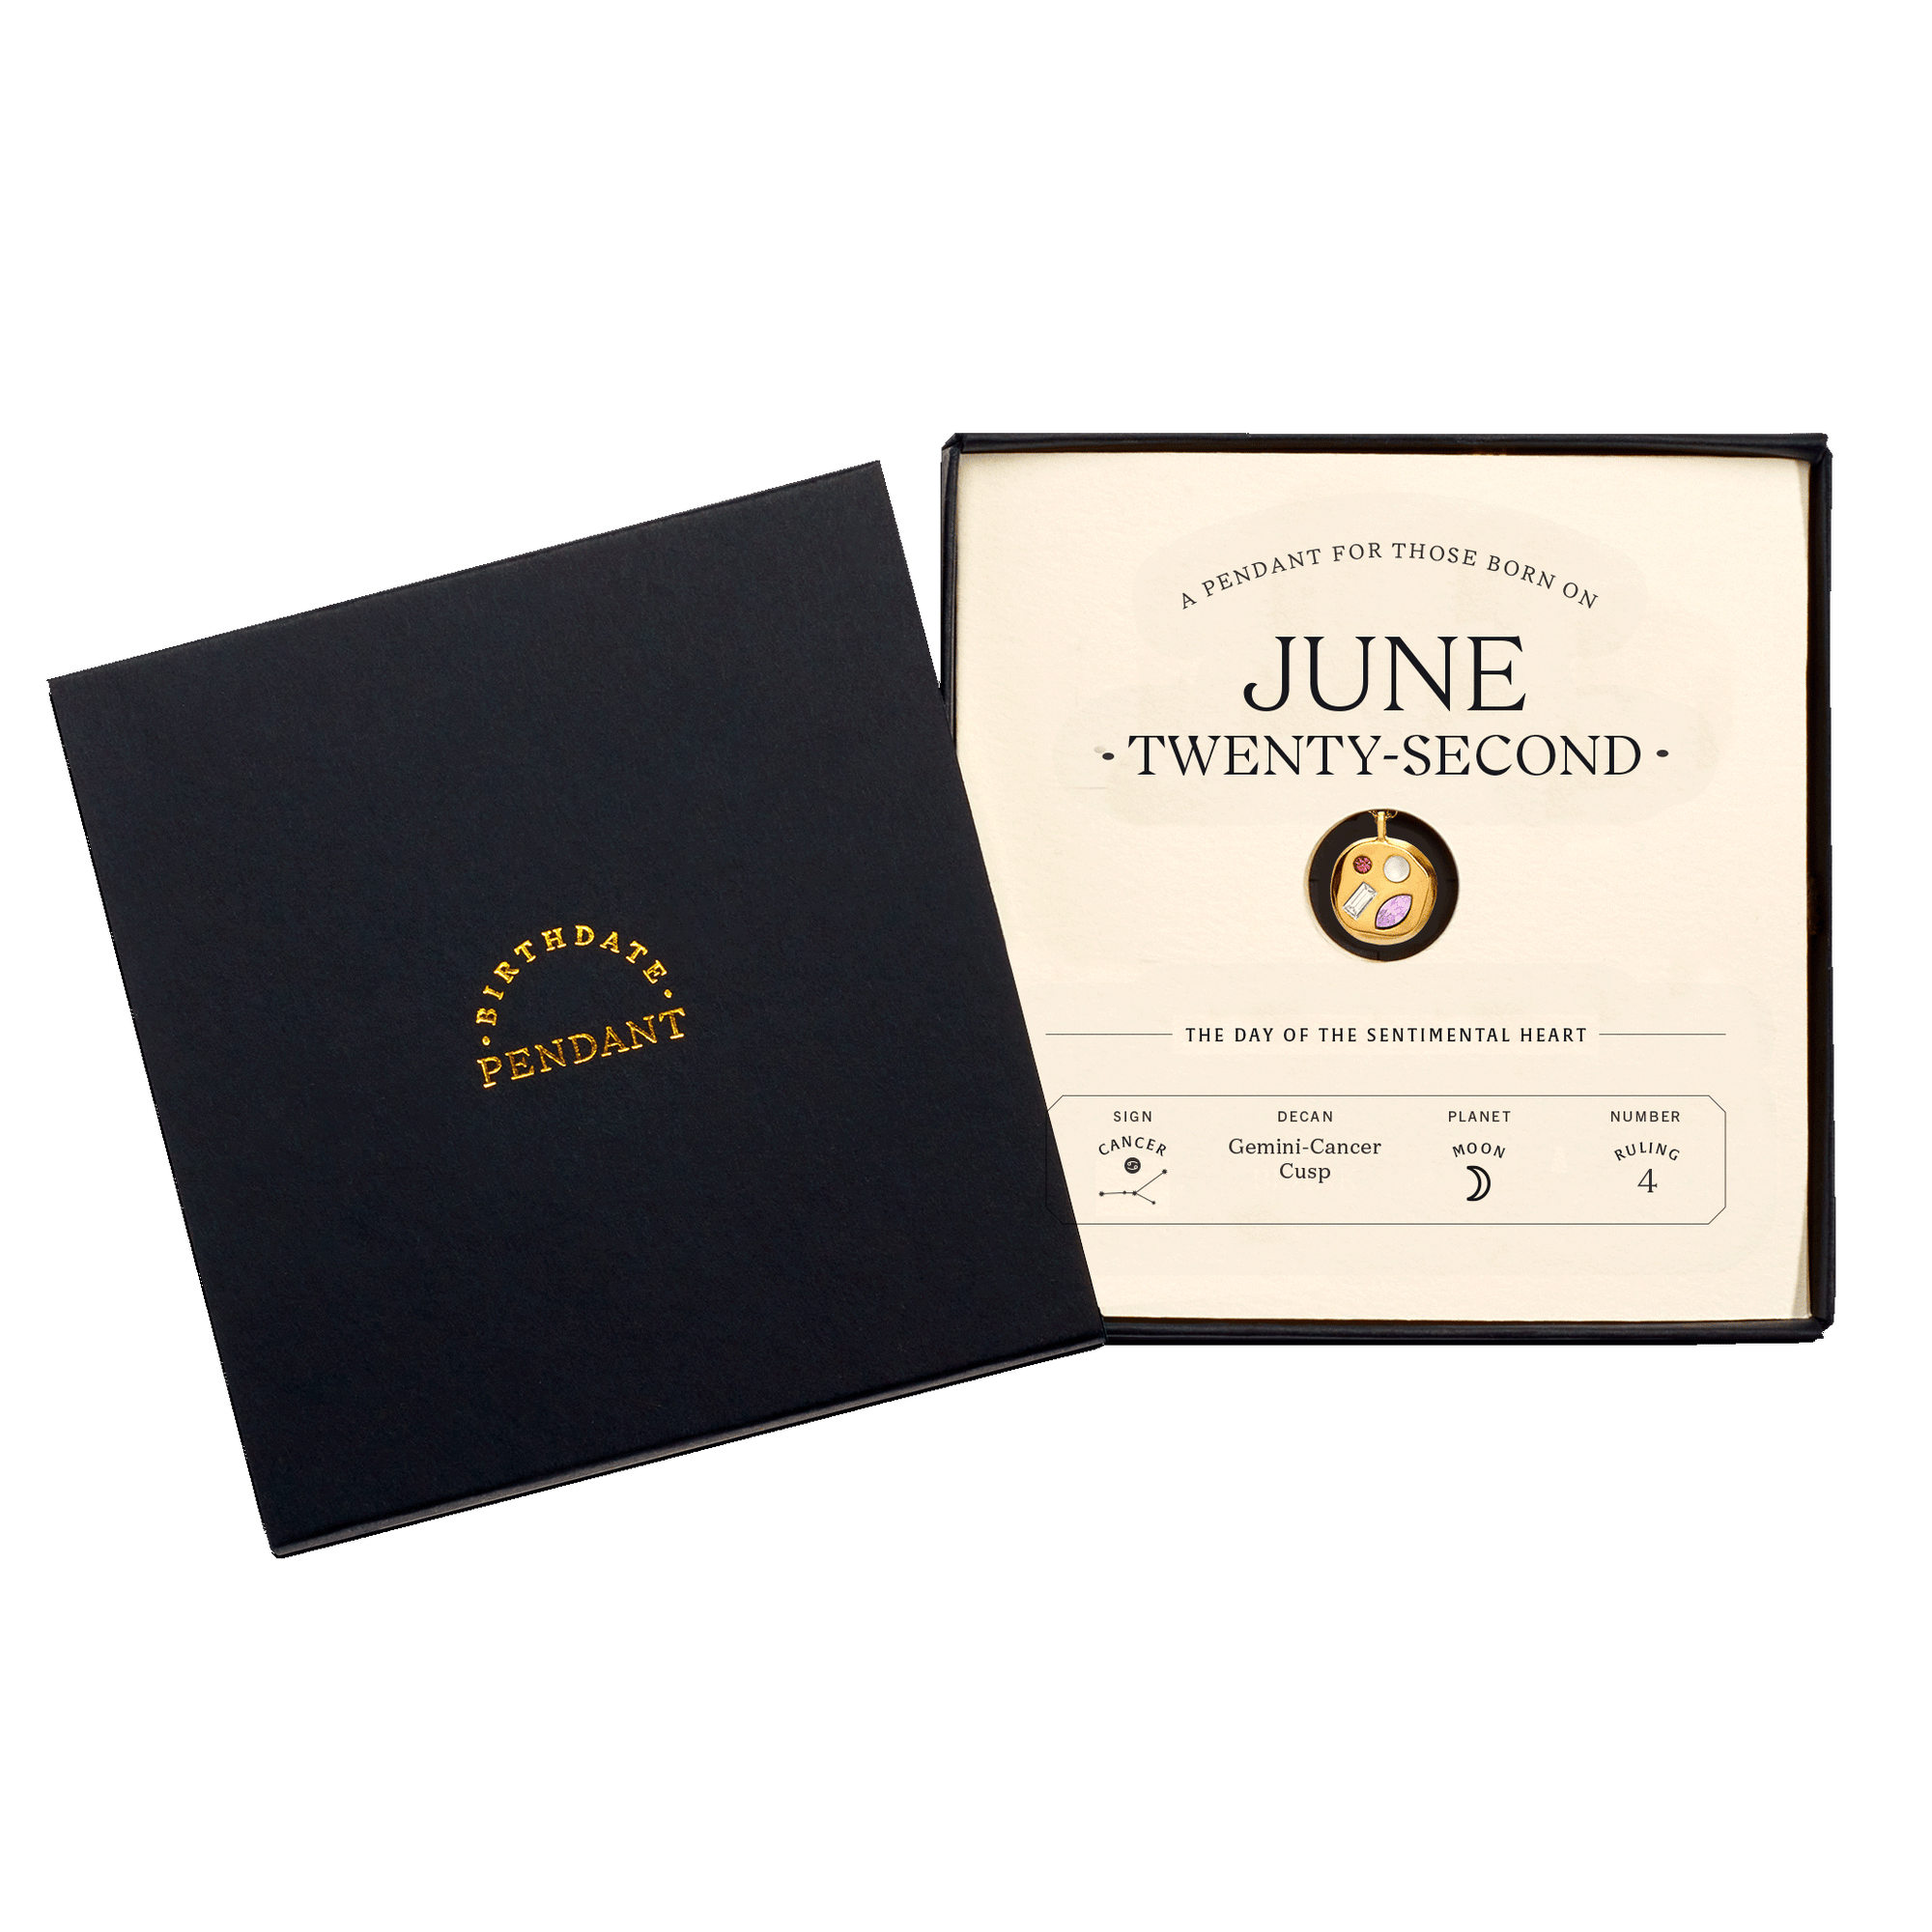 The June Twenty-Second Pendant inside its box